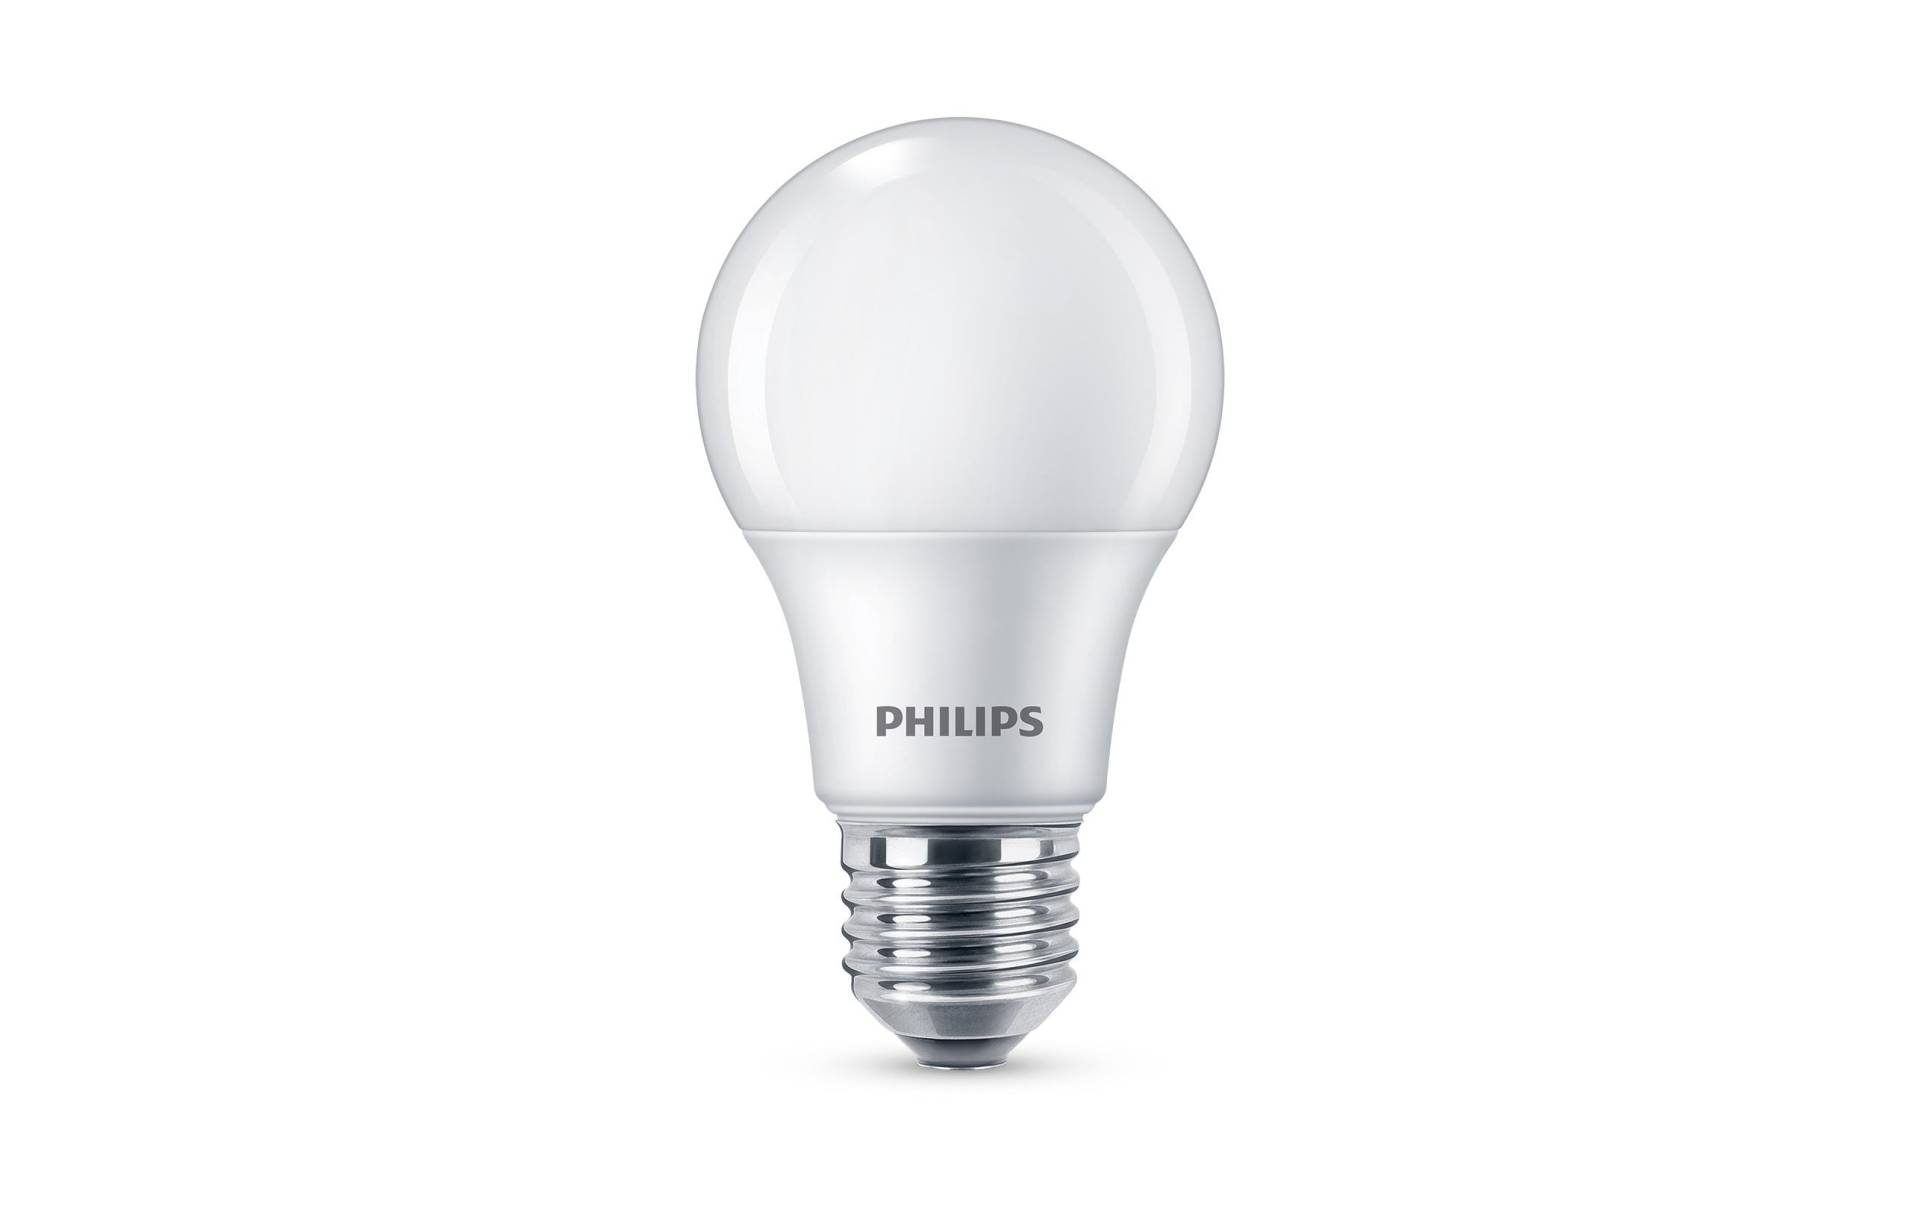 Philips LED-Leuchtmittel »Philips LED Lampe 8W«, E27, Warmweiss von Philips